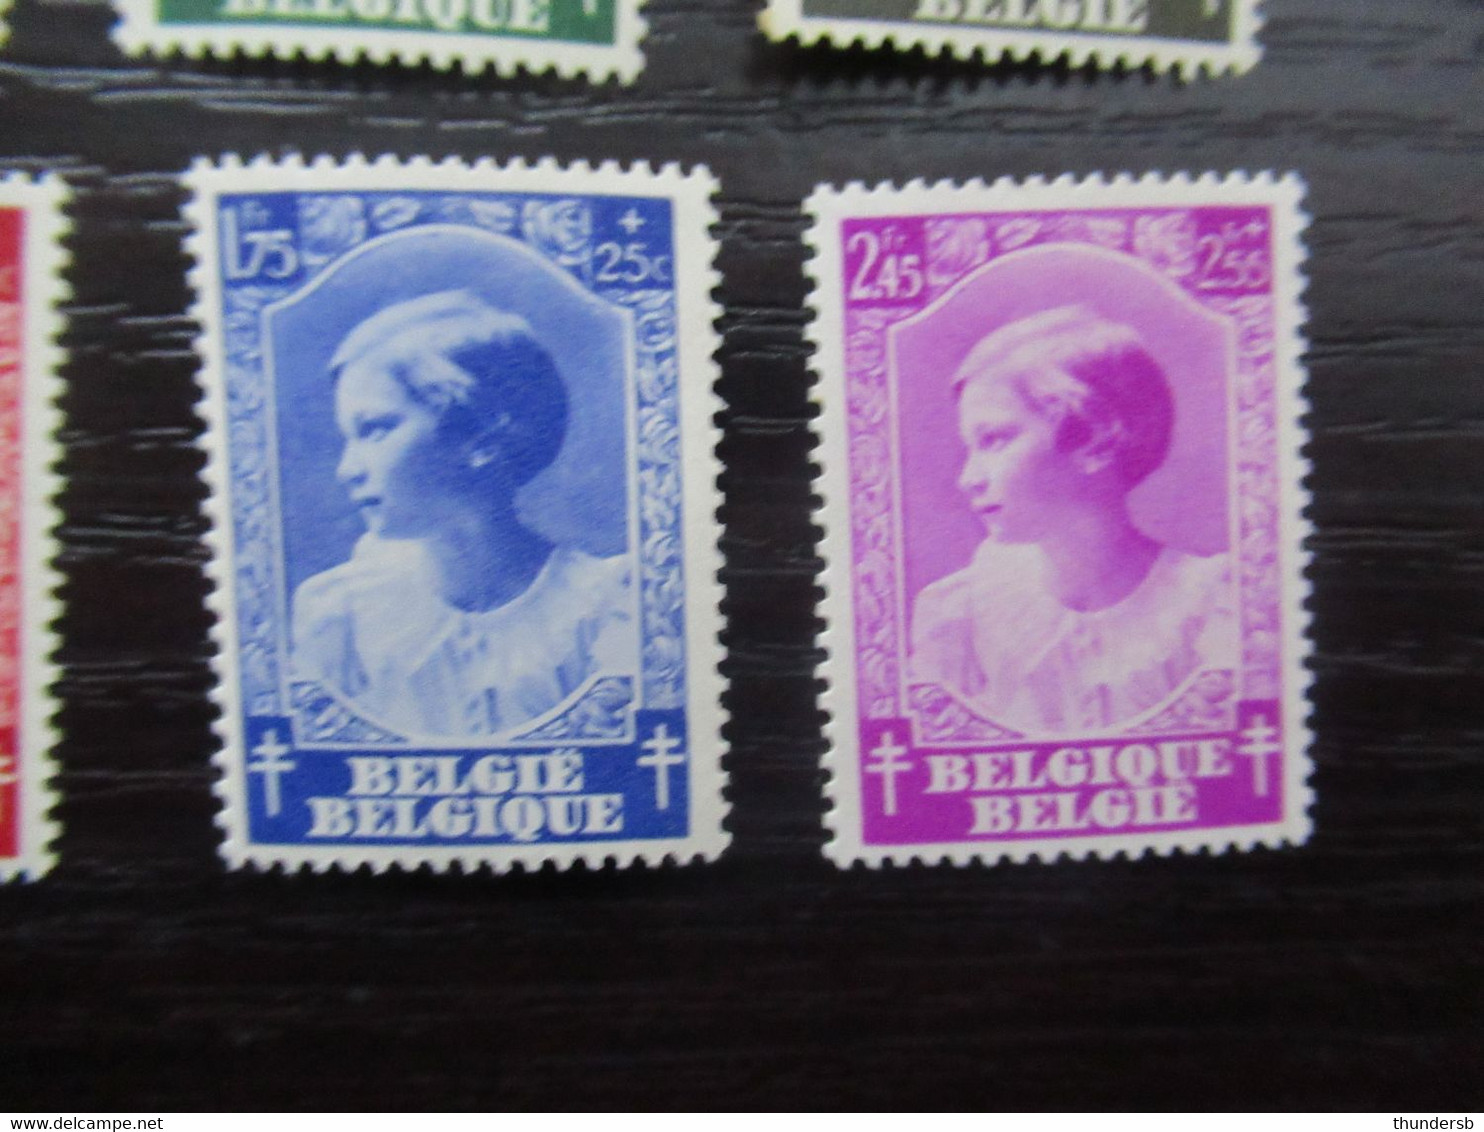 458/65 'Joséphine-Charlotte' - Postfris ** - Côte: 30 Euro - Unused Stamps